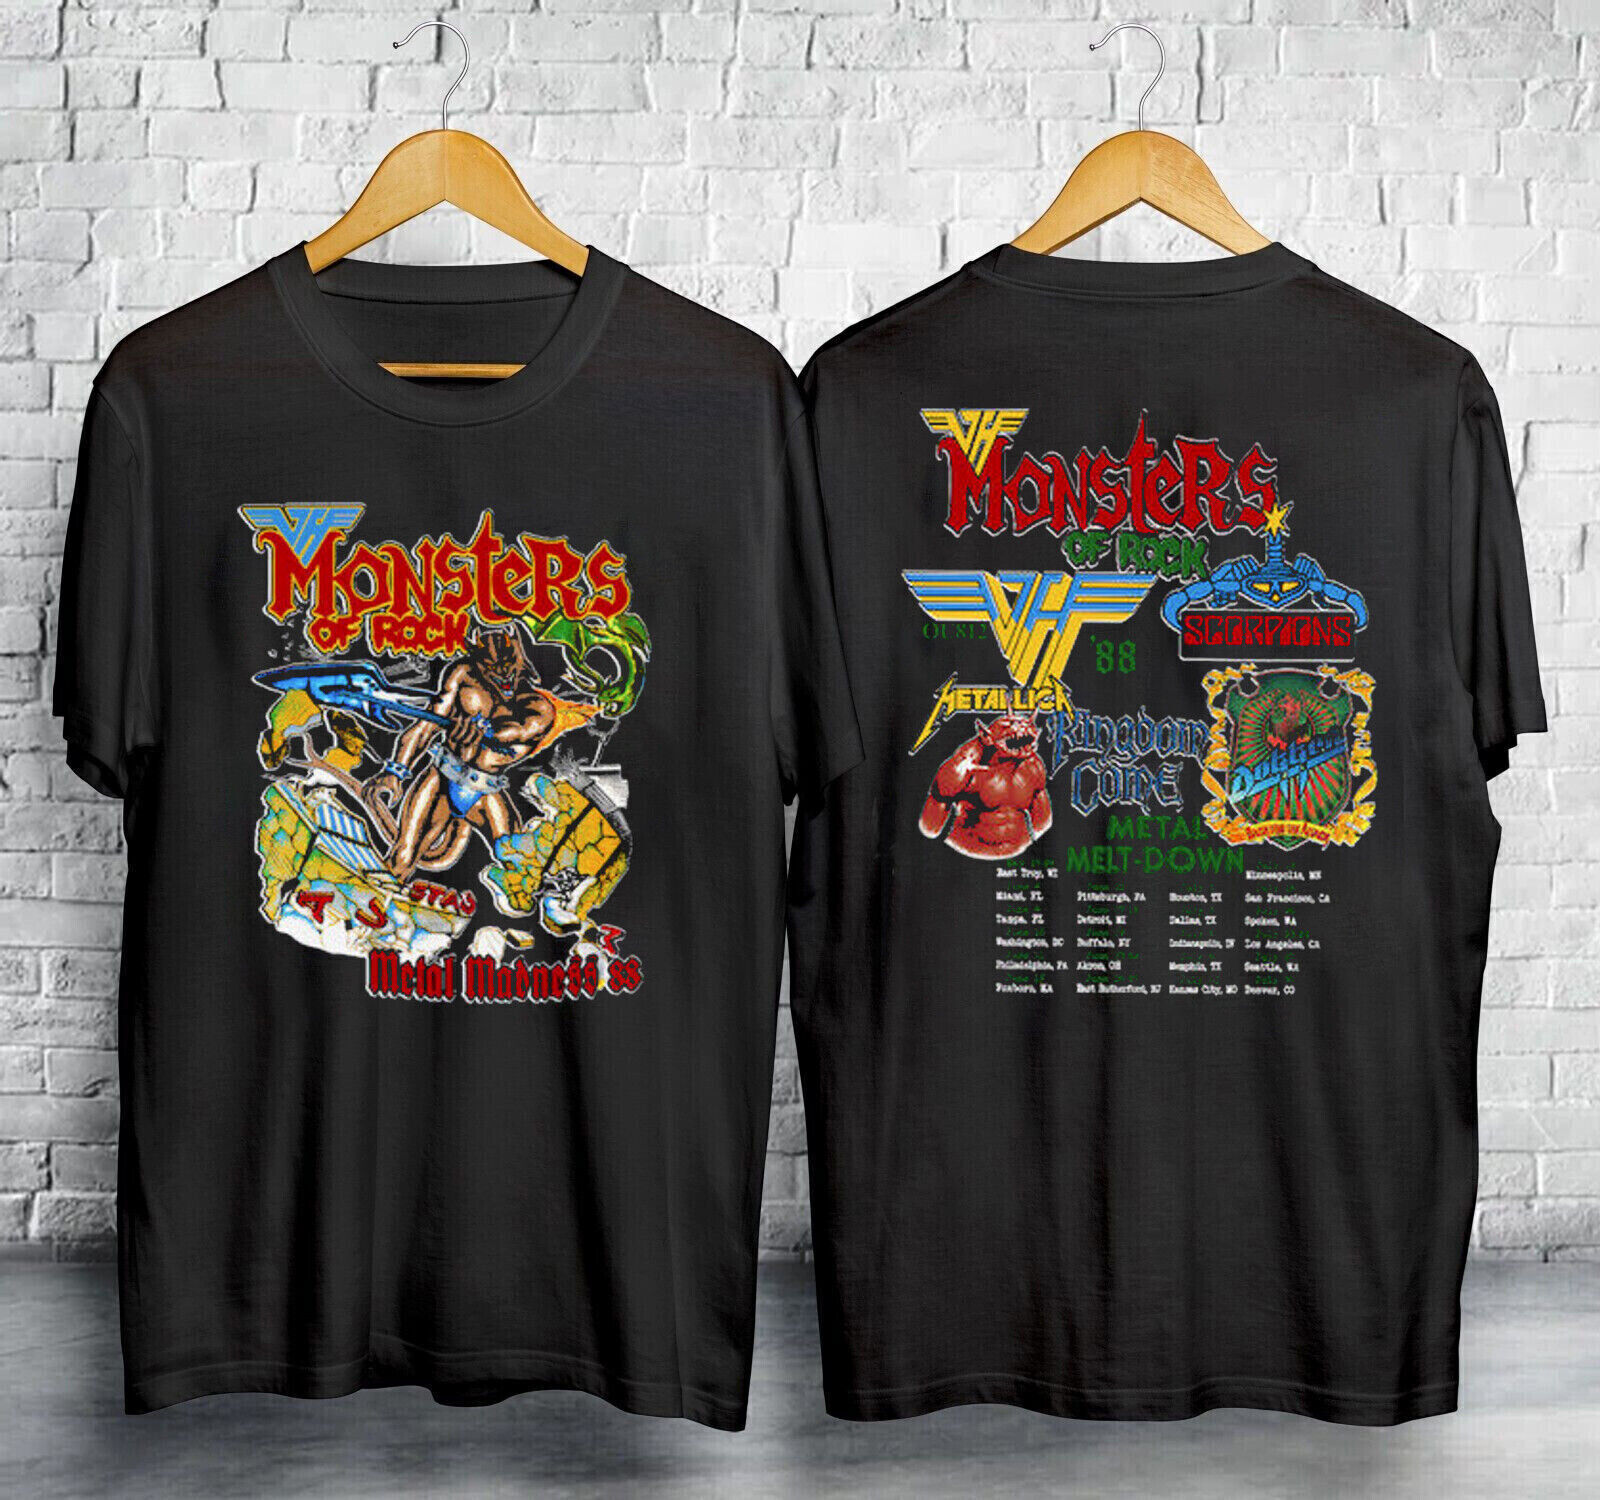 SALE_Vintage 1988 Van Halen Monsters of Rock Concert Unisex T-Shirt Size S-5XL